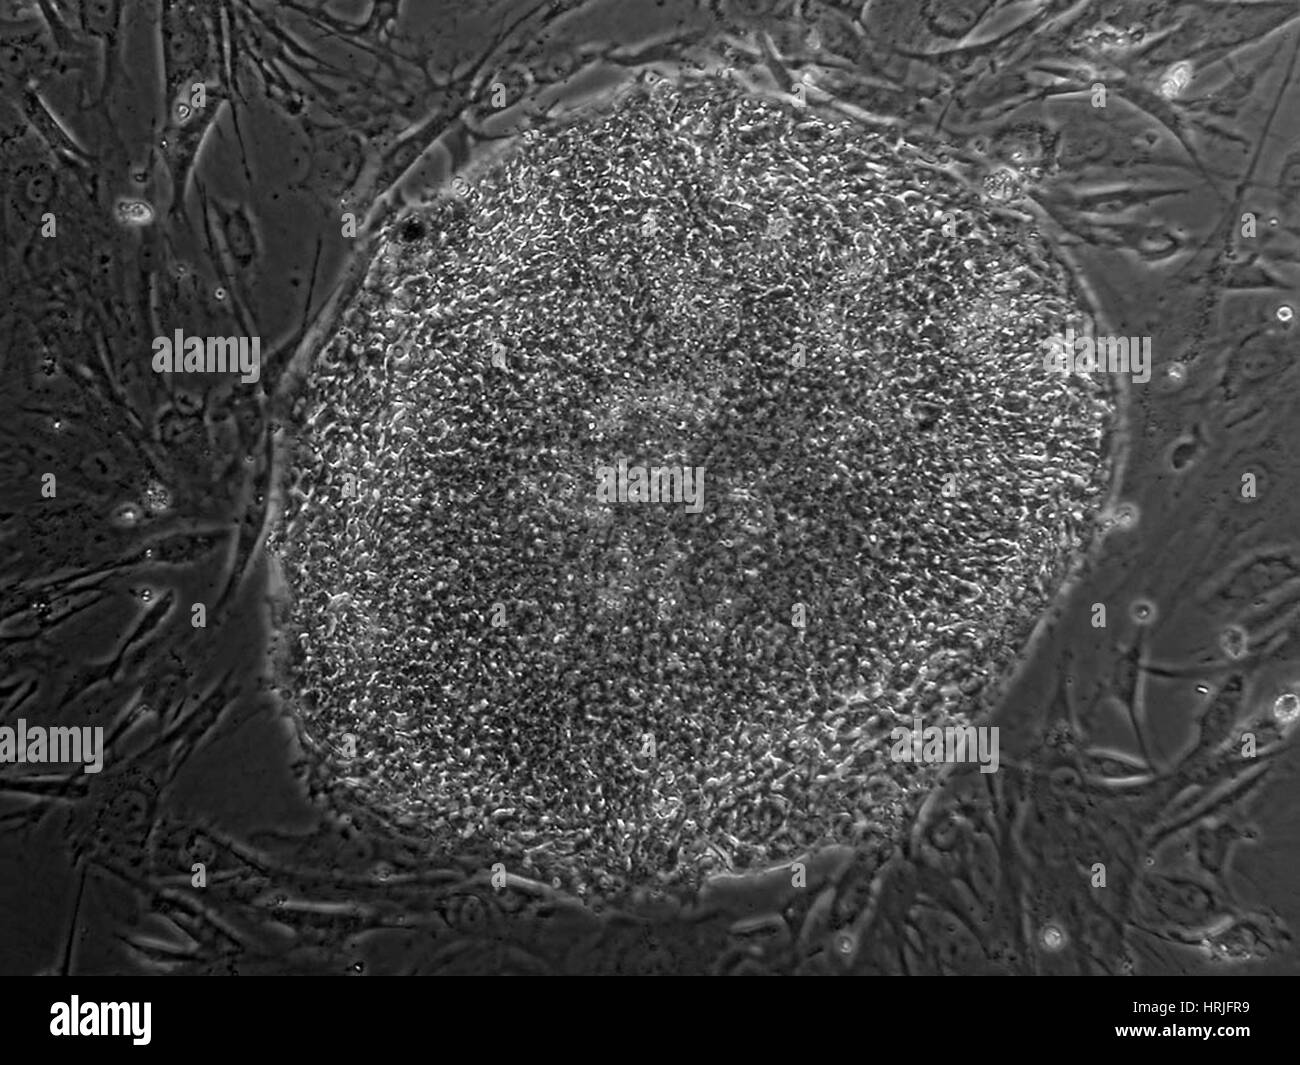 Human Embryonic Stem Cell Line BG02 Stock Photo